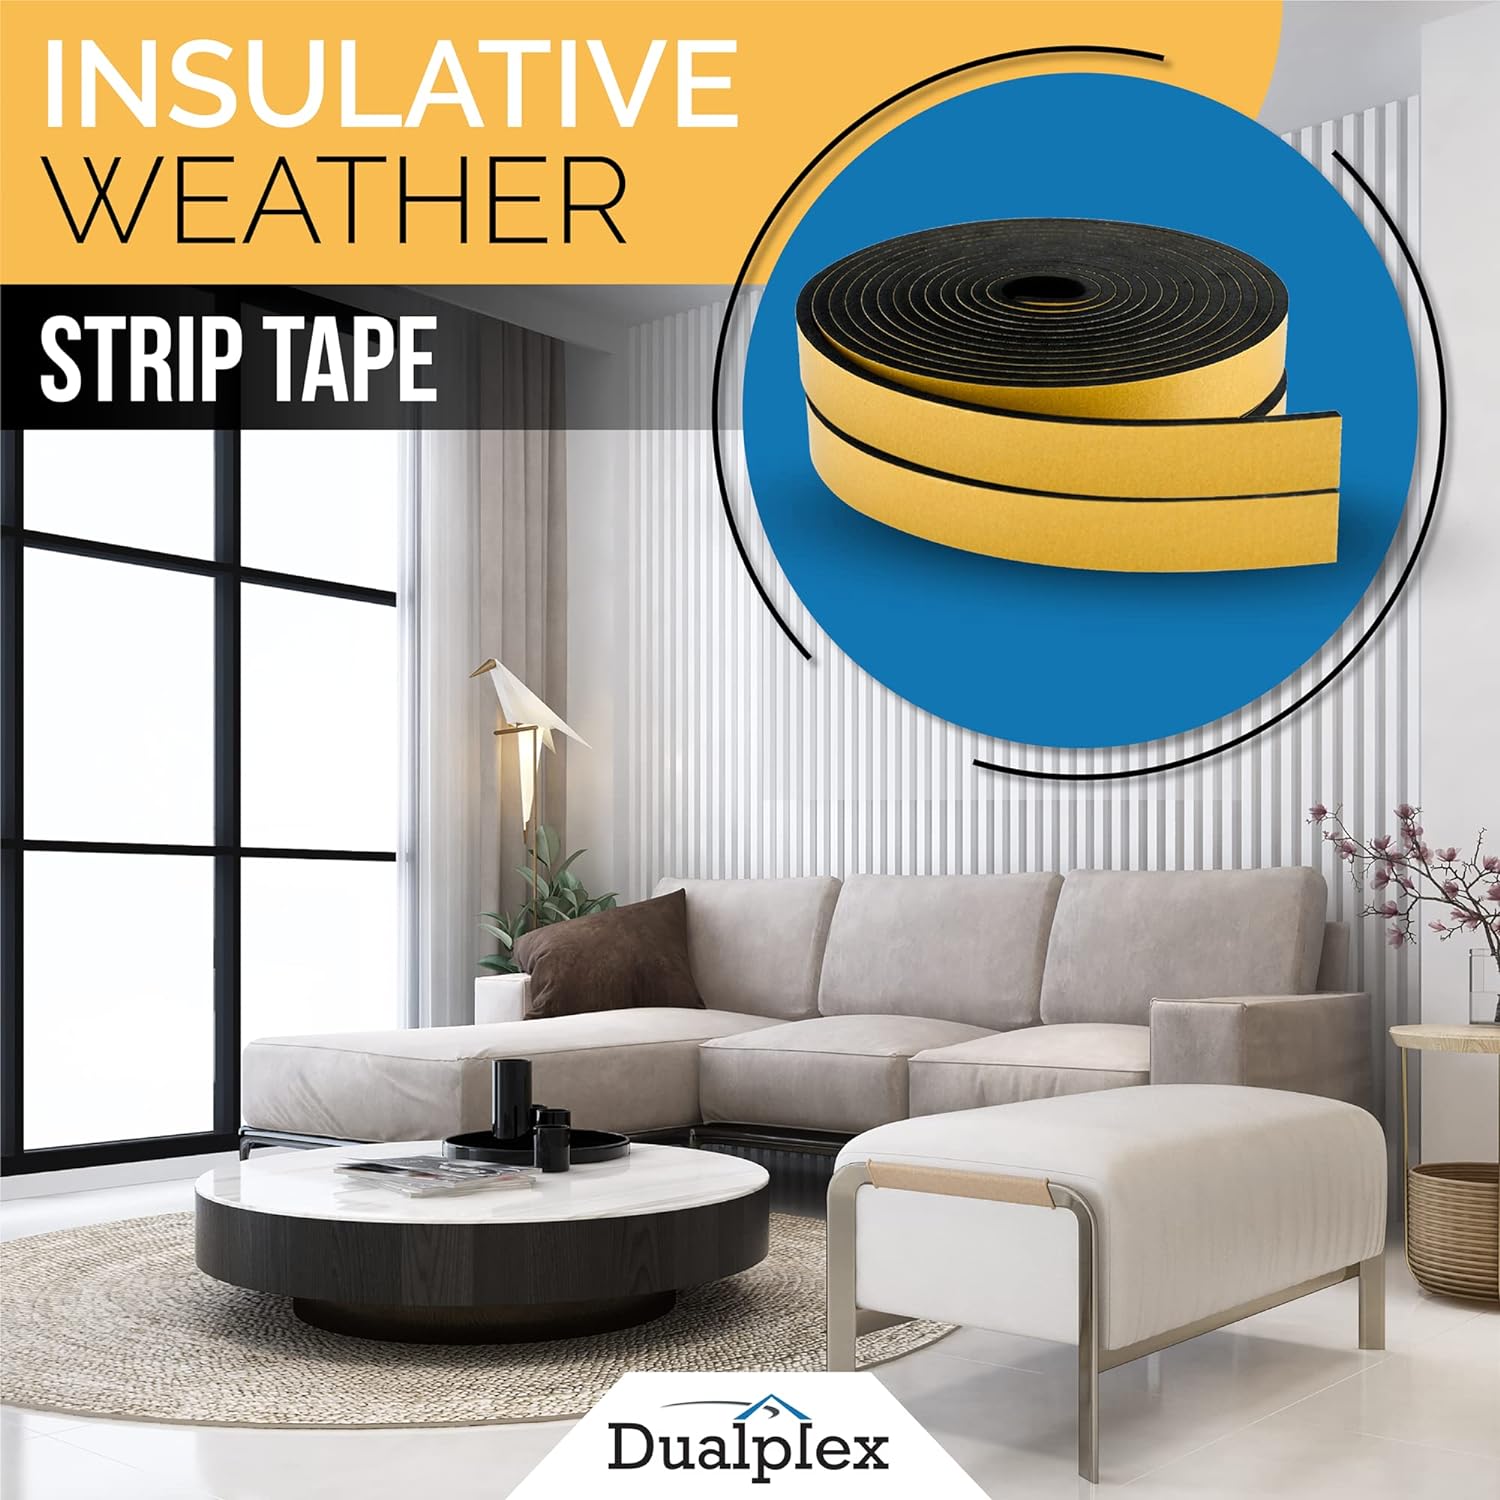 Dualplex Foam Weather Stripping Door Seal Strip Insulation Tape Roll for Insulating Door Frame, Window, Air Conditioner, Plumbing Pipe |